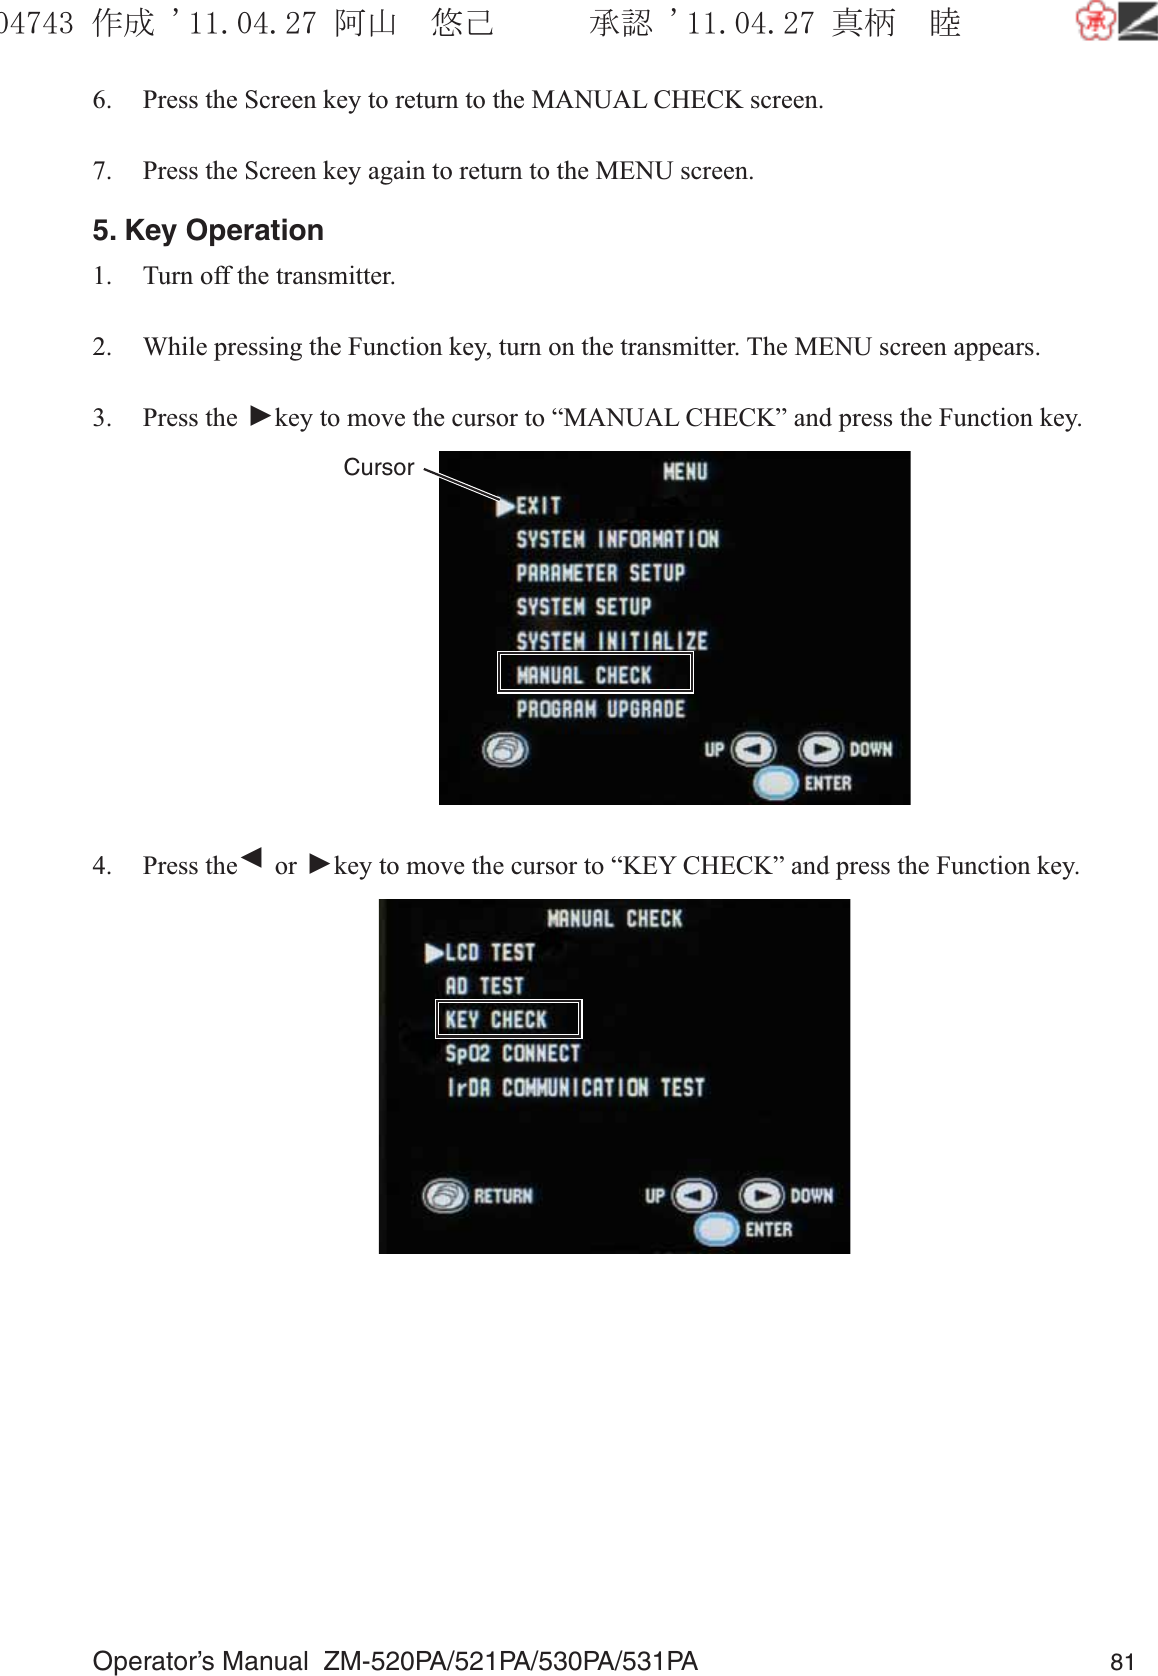 Operator’s Manual  ZM-520PA/521PA/530PA/531PA 816.  Press the Screen key to return to the MANUAL CHECK screen.7.  Press the Screen key again to return to the MENU screen.5. Key Operation1.  Turn off the transmitter.2.  While pressing the Function key, turn on the transmitter. The MENU screen appears.3. Press the ▼ key to move the cursor to “MANUAL CHECK” and press the Function key.Cursor4. Press the ▼ or ▼ key to move the cursor to “KEY CHECK” and press the Function key.૞ᚑ㒙ጊޓᖘᏆ ᛚ⹺⌀ᨩޓ⌬